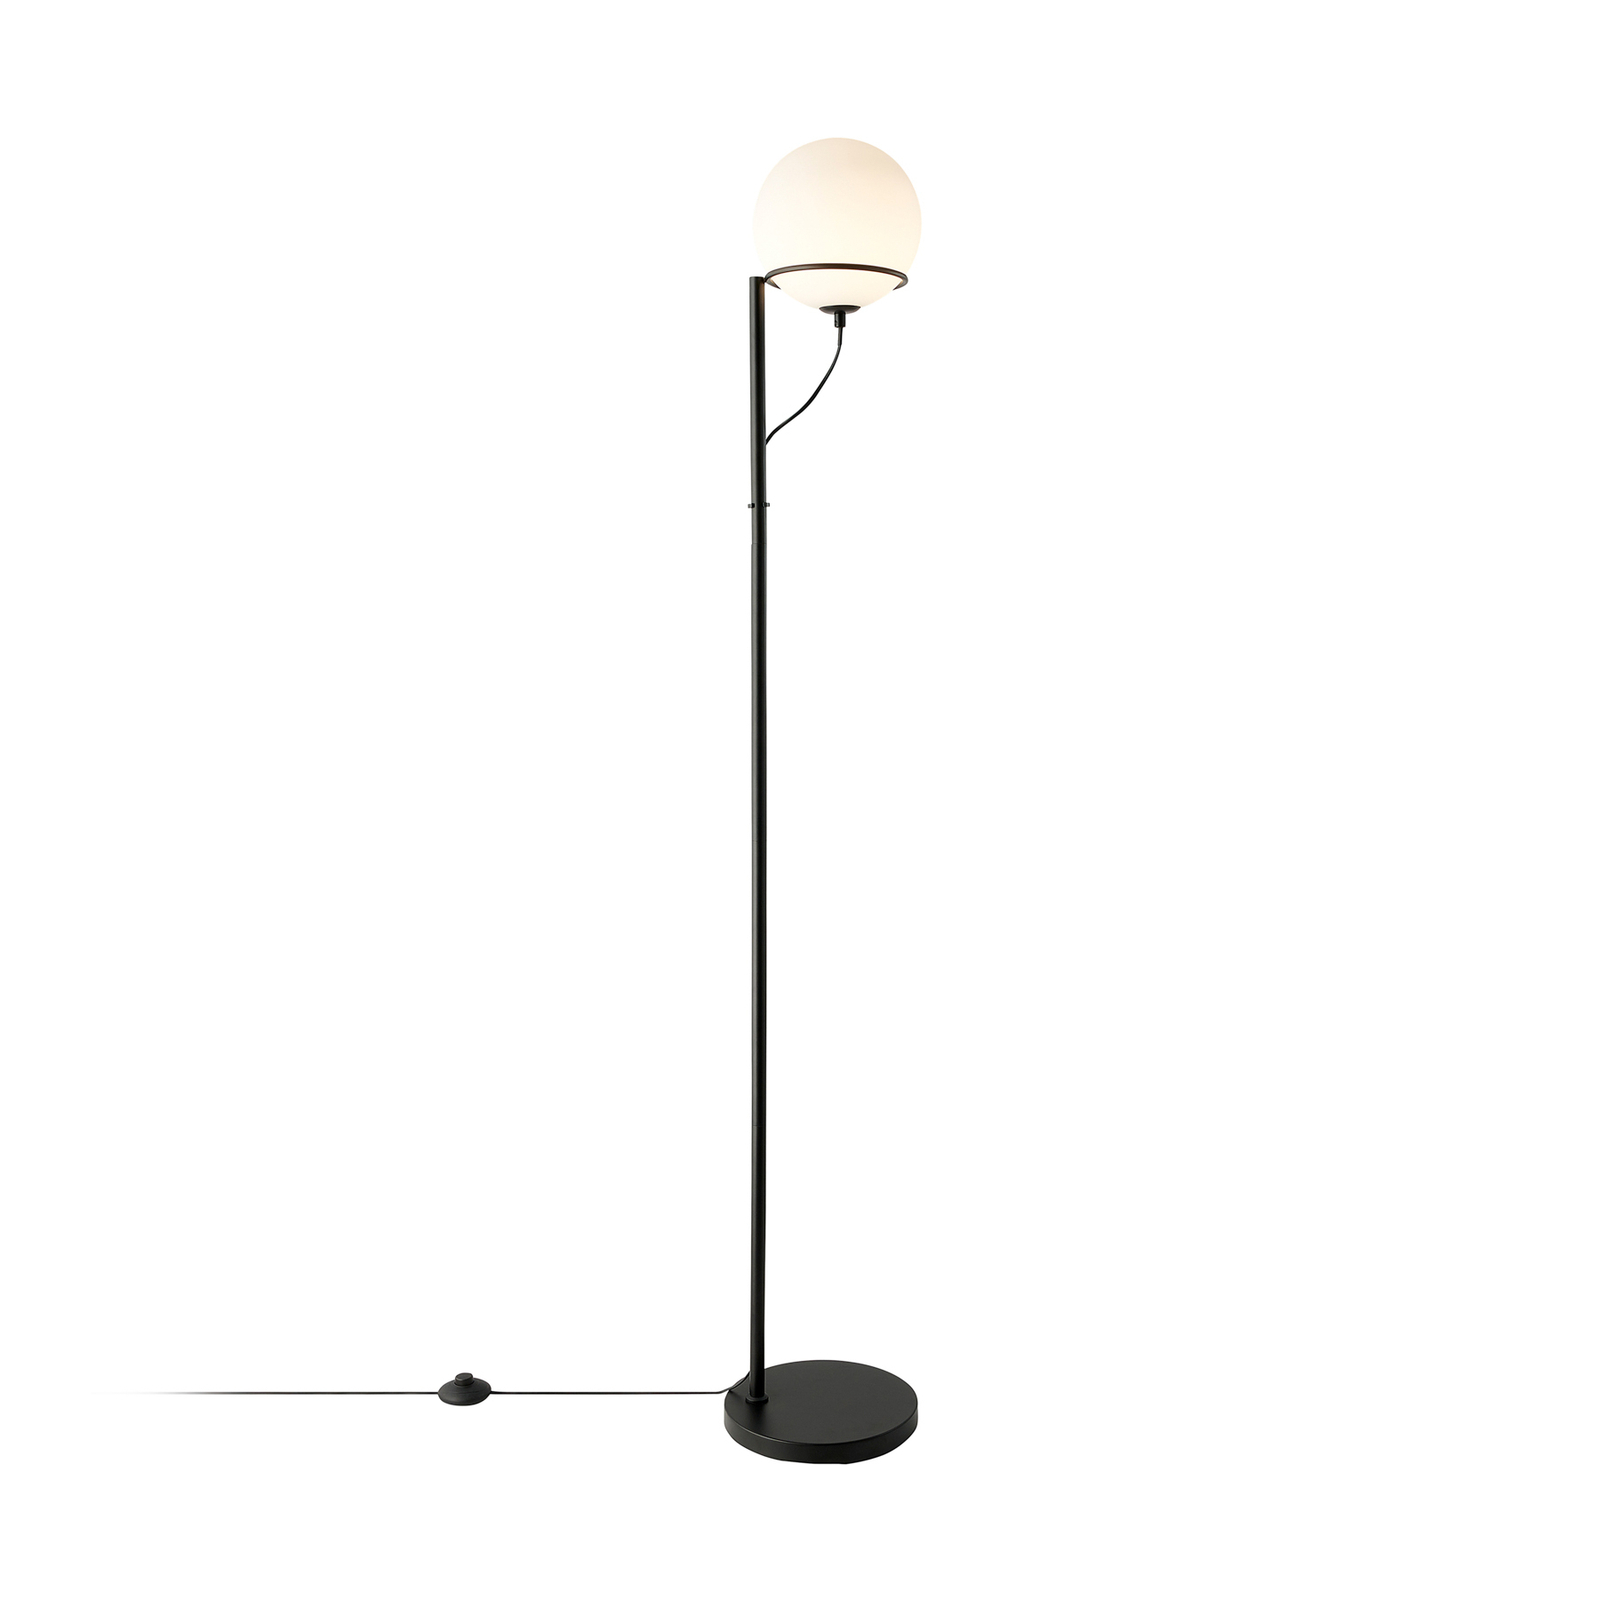 Wilson floor lamp, metal, black, glass globe shade